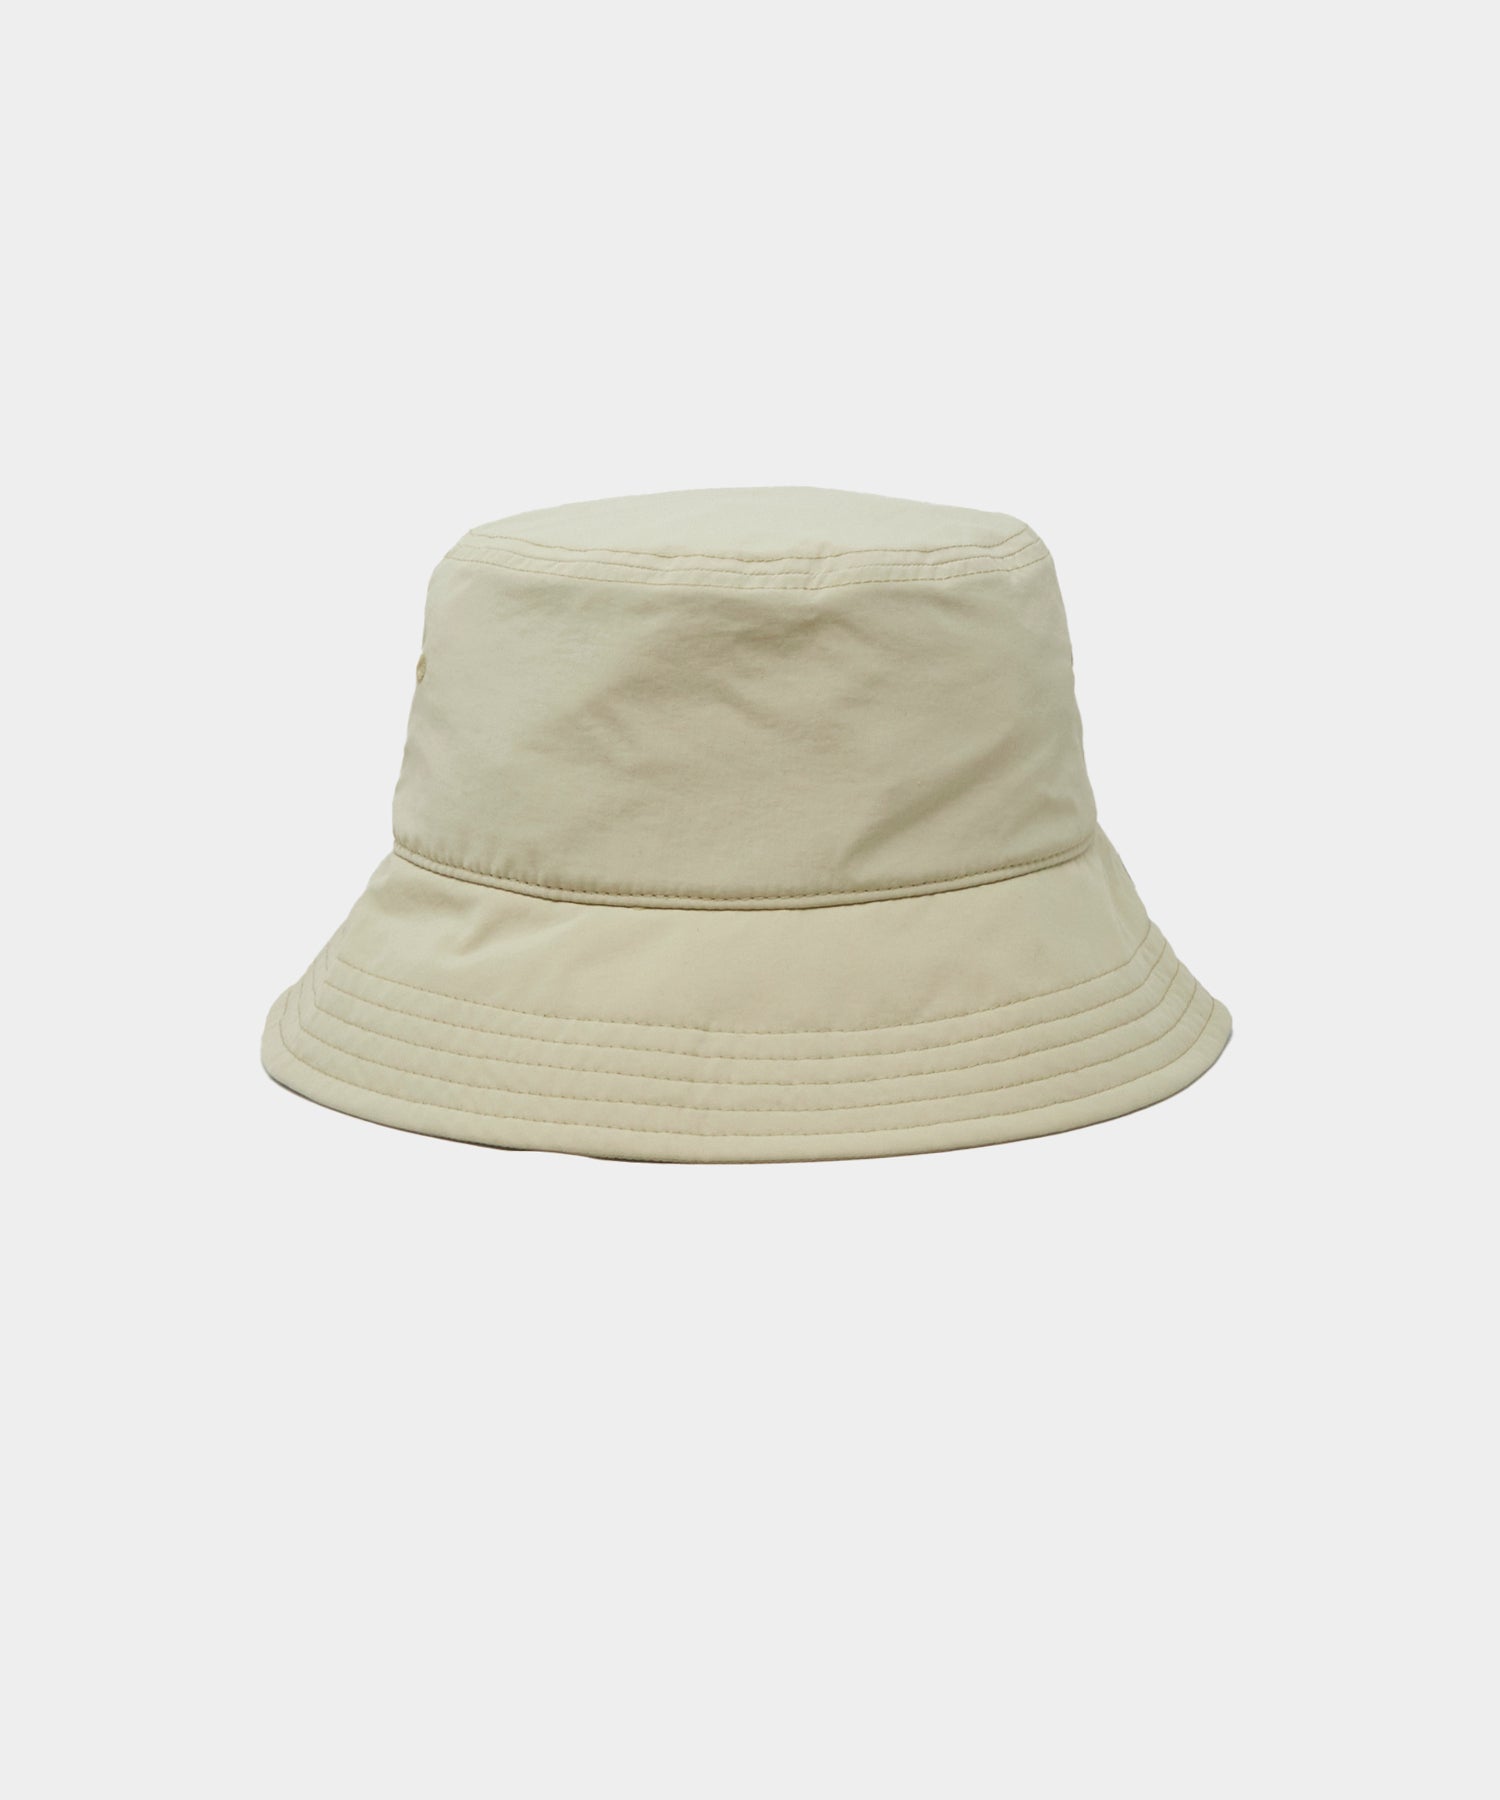 Todd Snyder X Gardenheir Nylon Bucket Hat